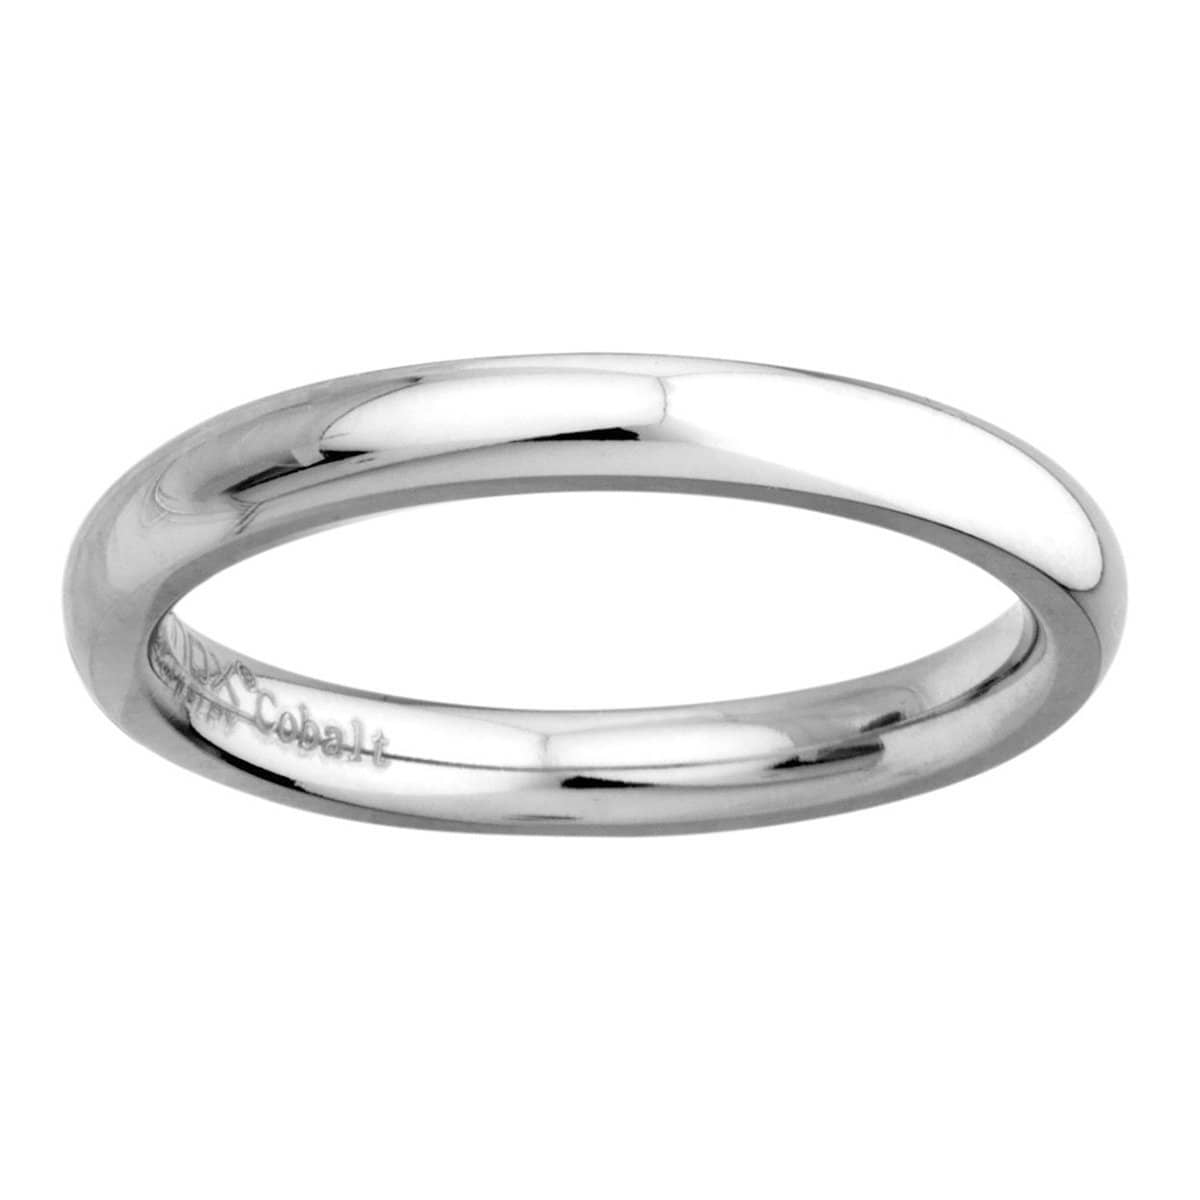 INOX JEWELRY Rings Silver Tone Cobalt Chrome High Polished 3mm Wedding Band